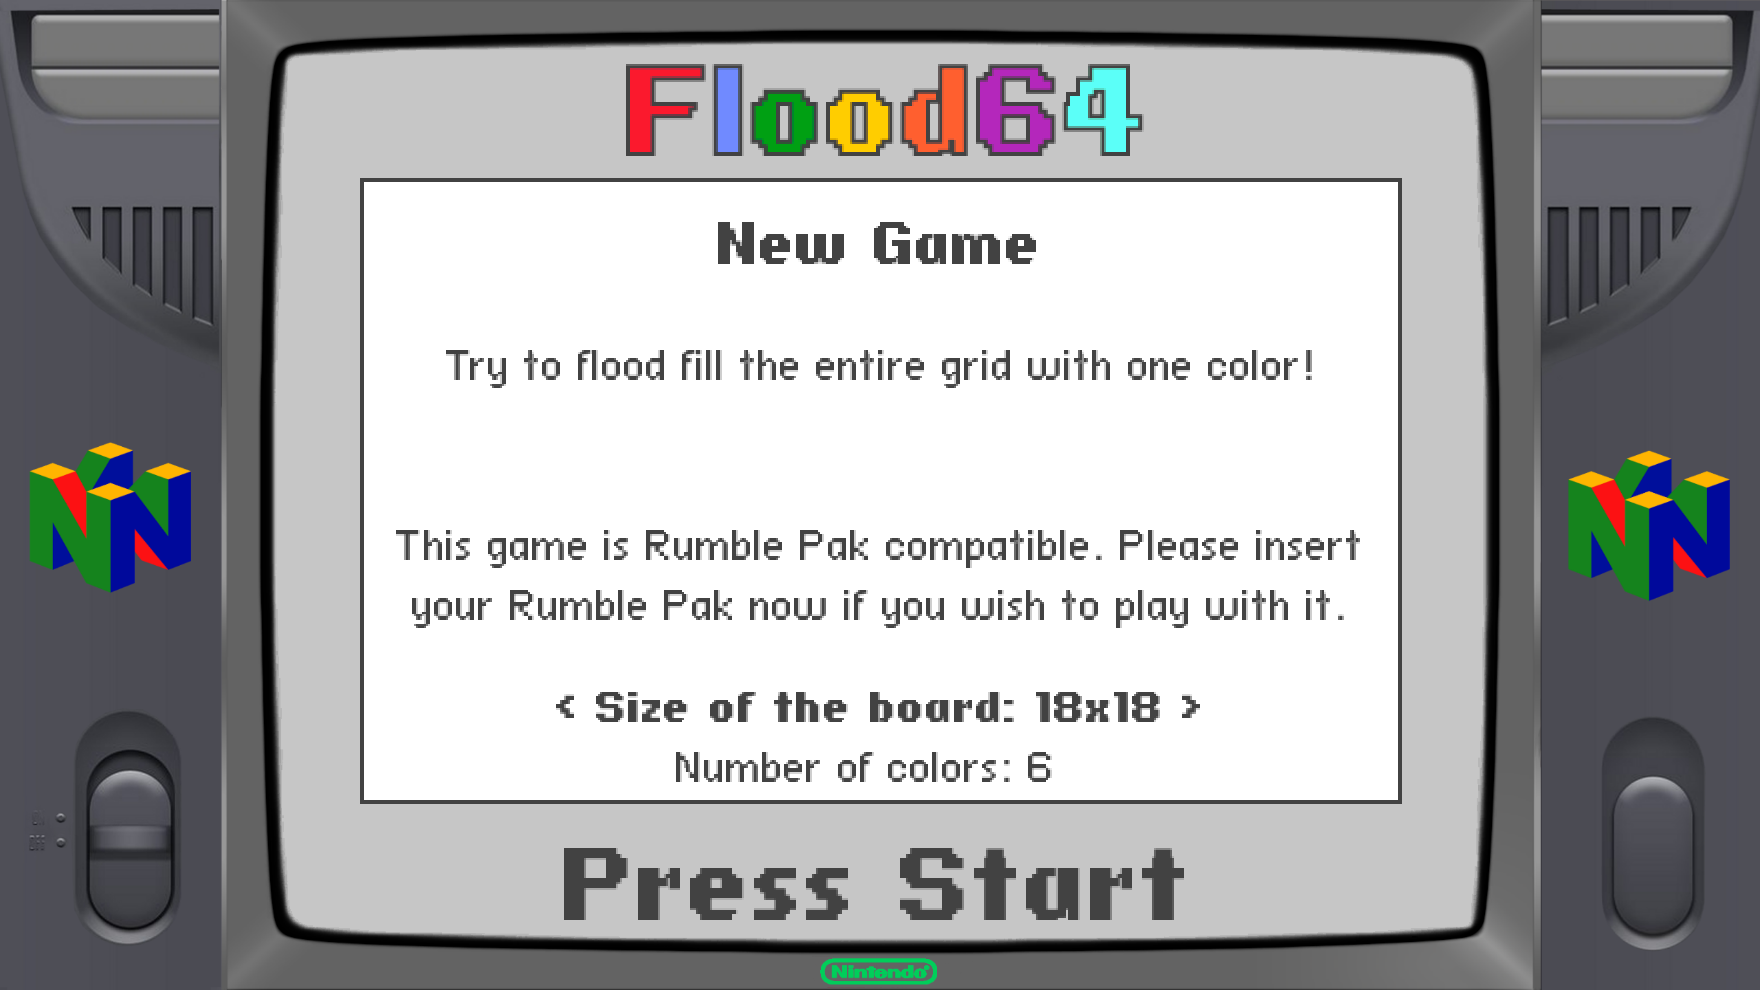 Flood64 for Nintendo 64